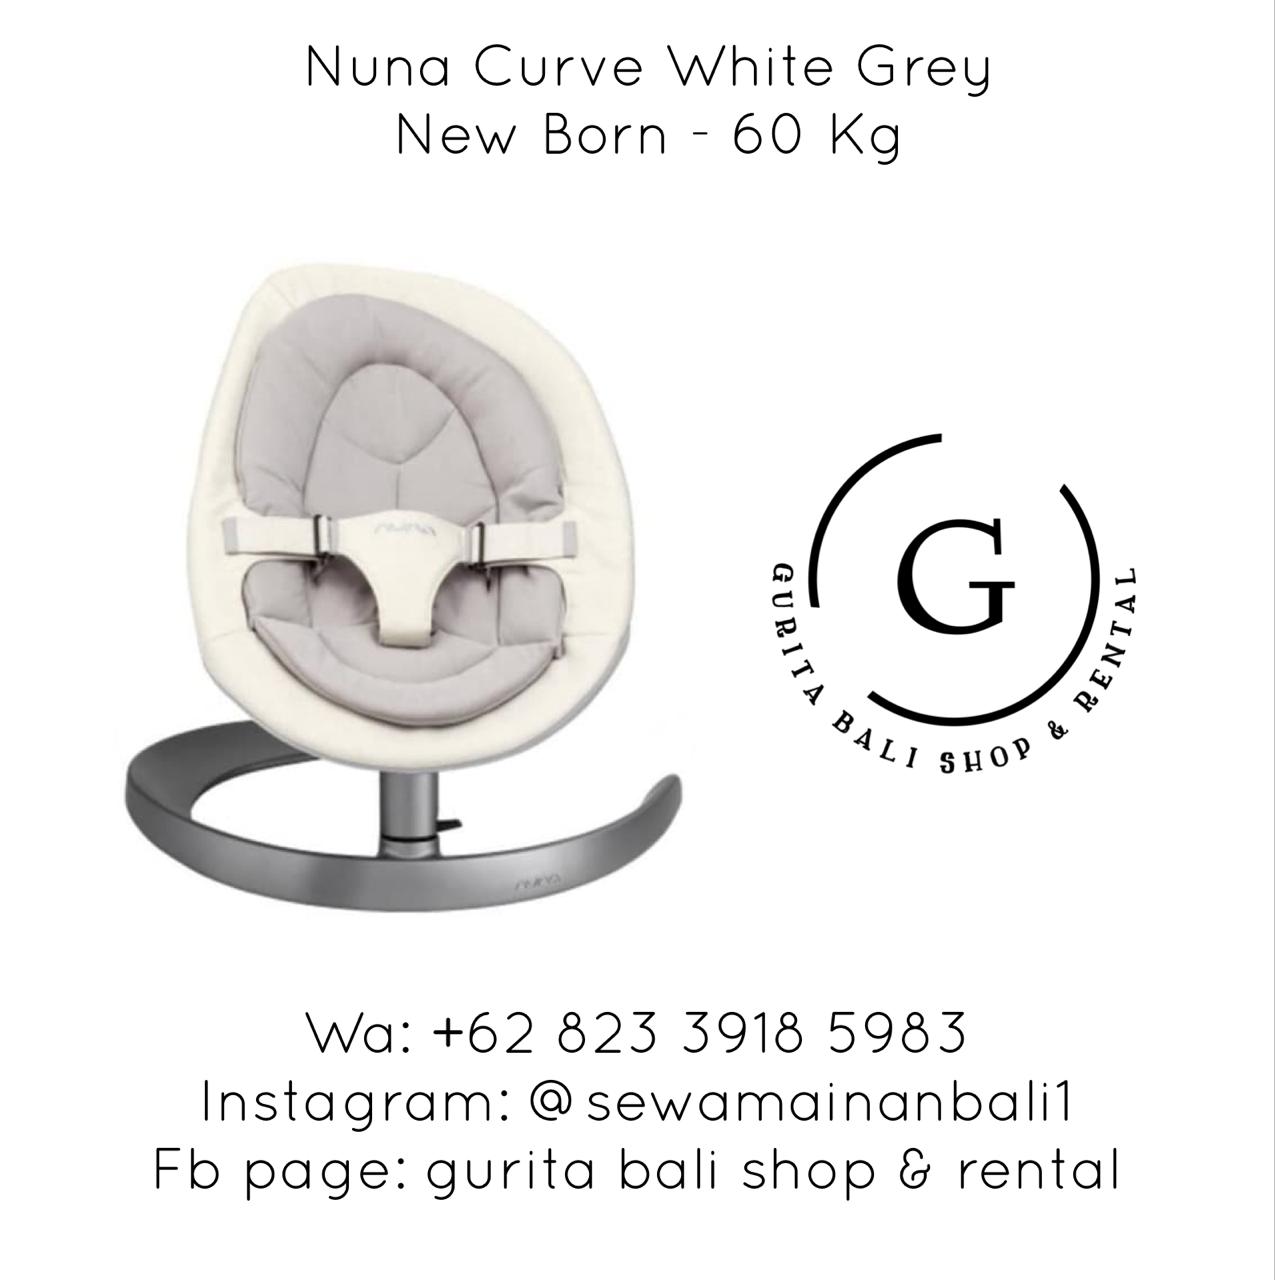 NUNA CURVE WHITE GREY